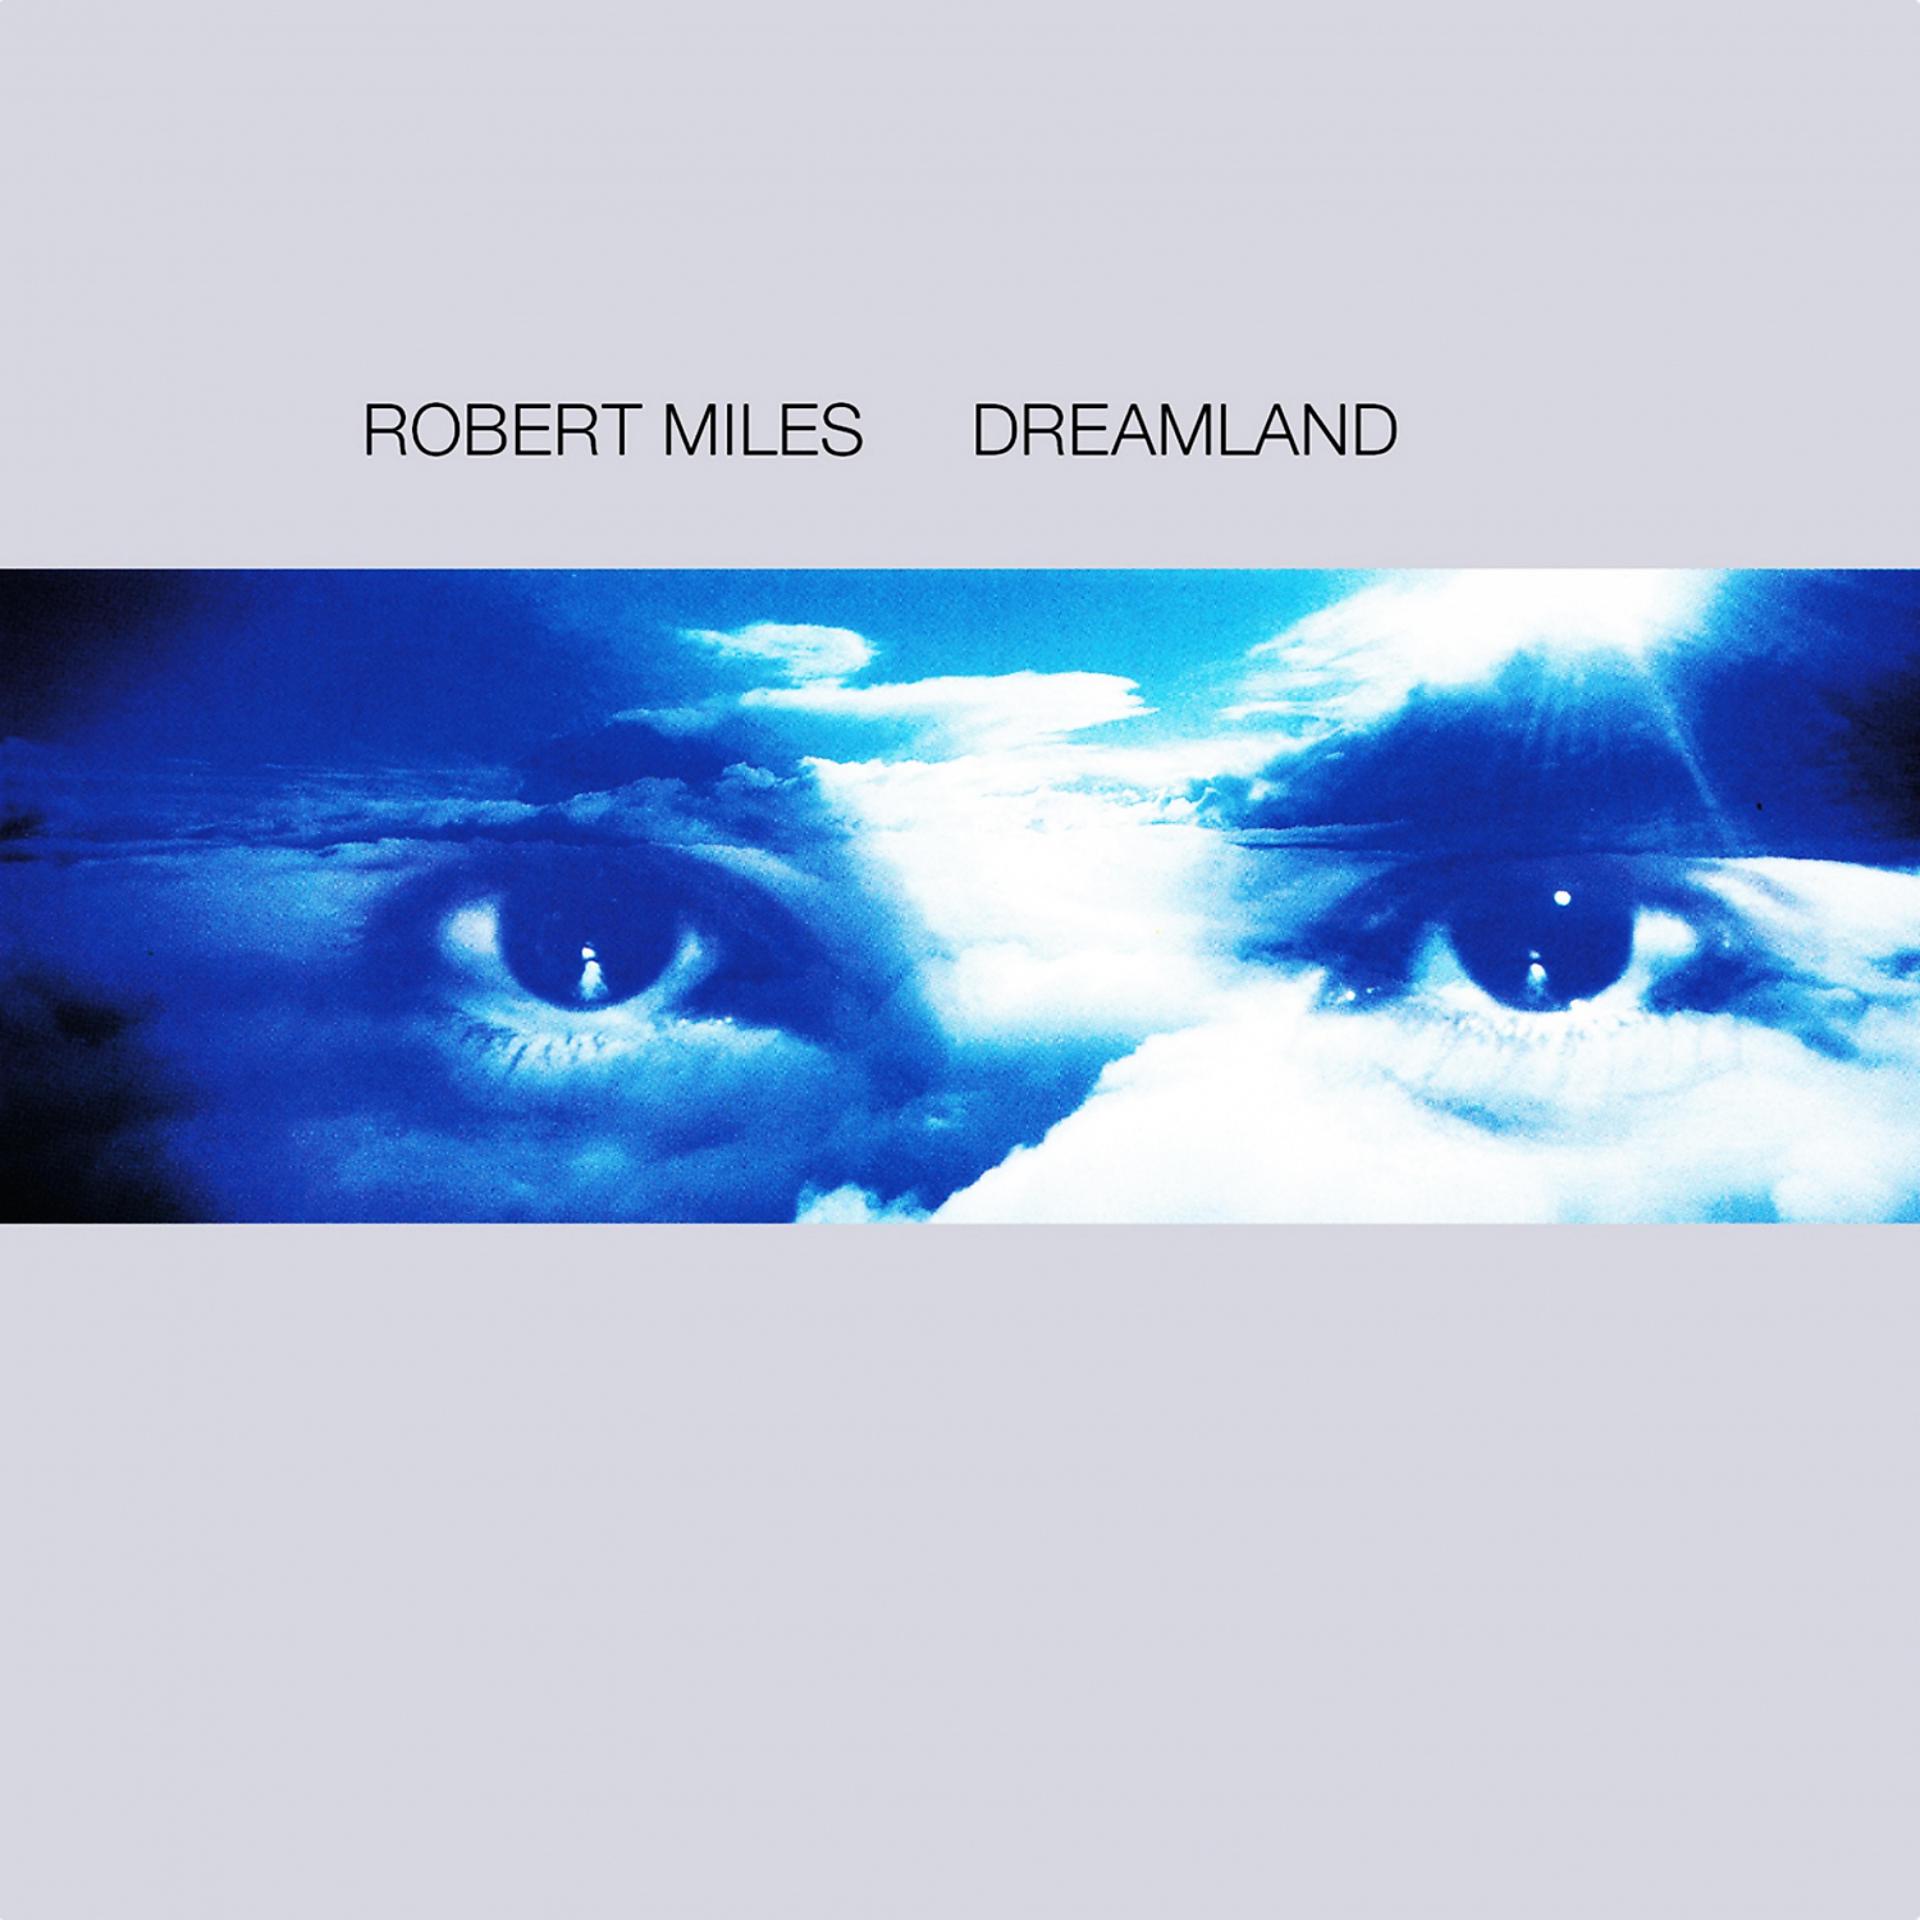 Robert Miles children 1996. Robert Miles Dreamland 1996. Robert Miles - Dreamland (1996) компакт диск. Robert miles песни